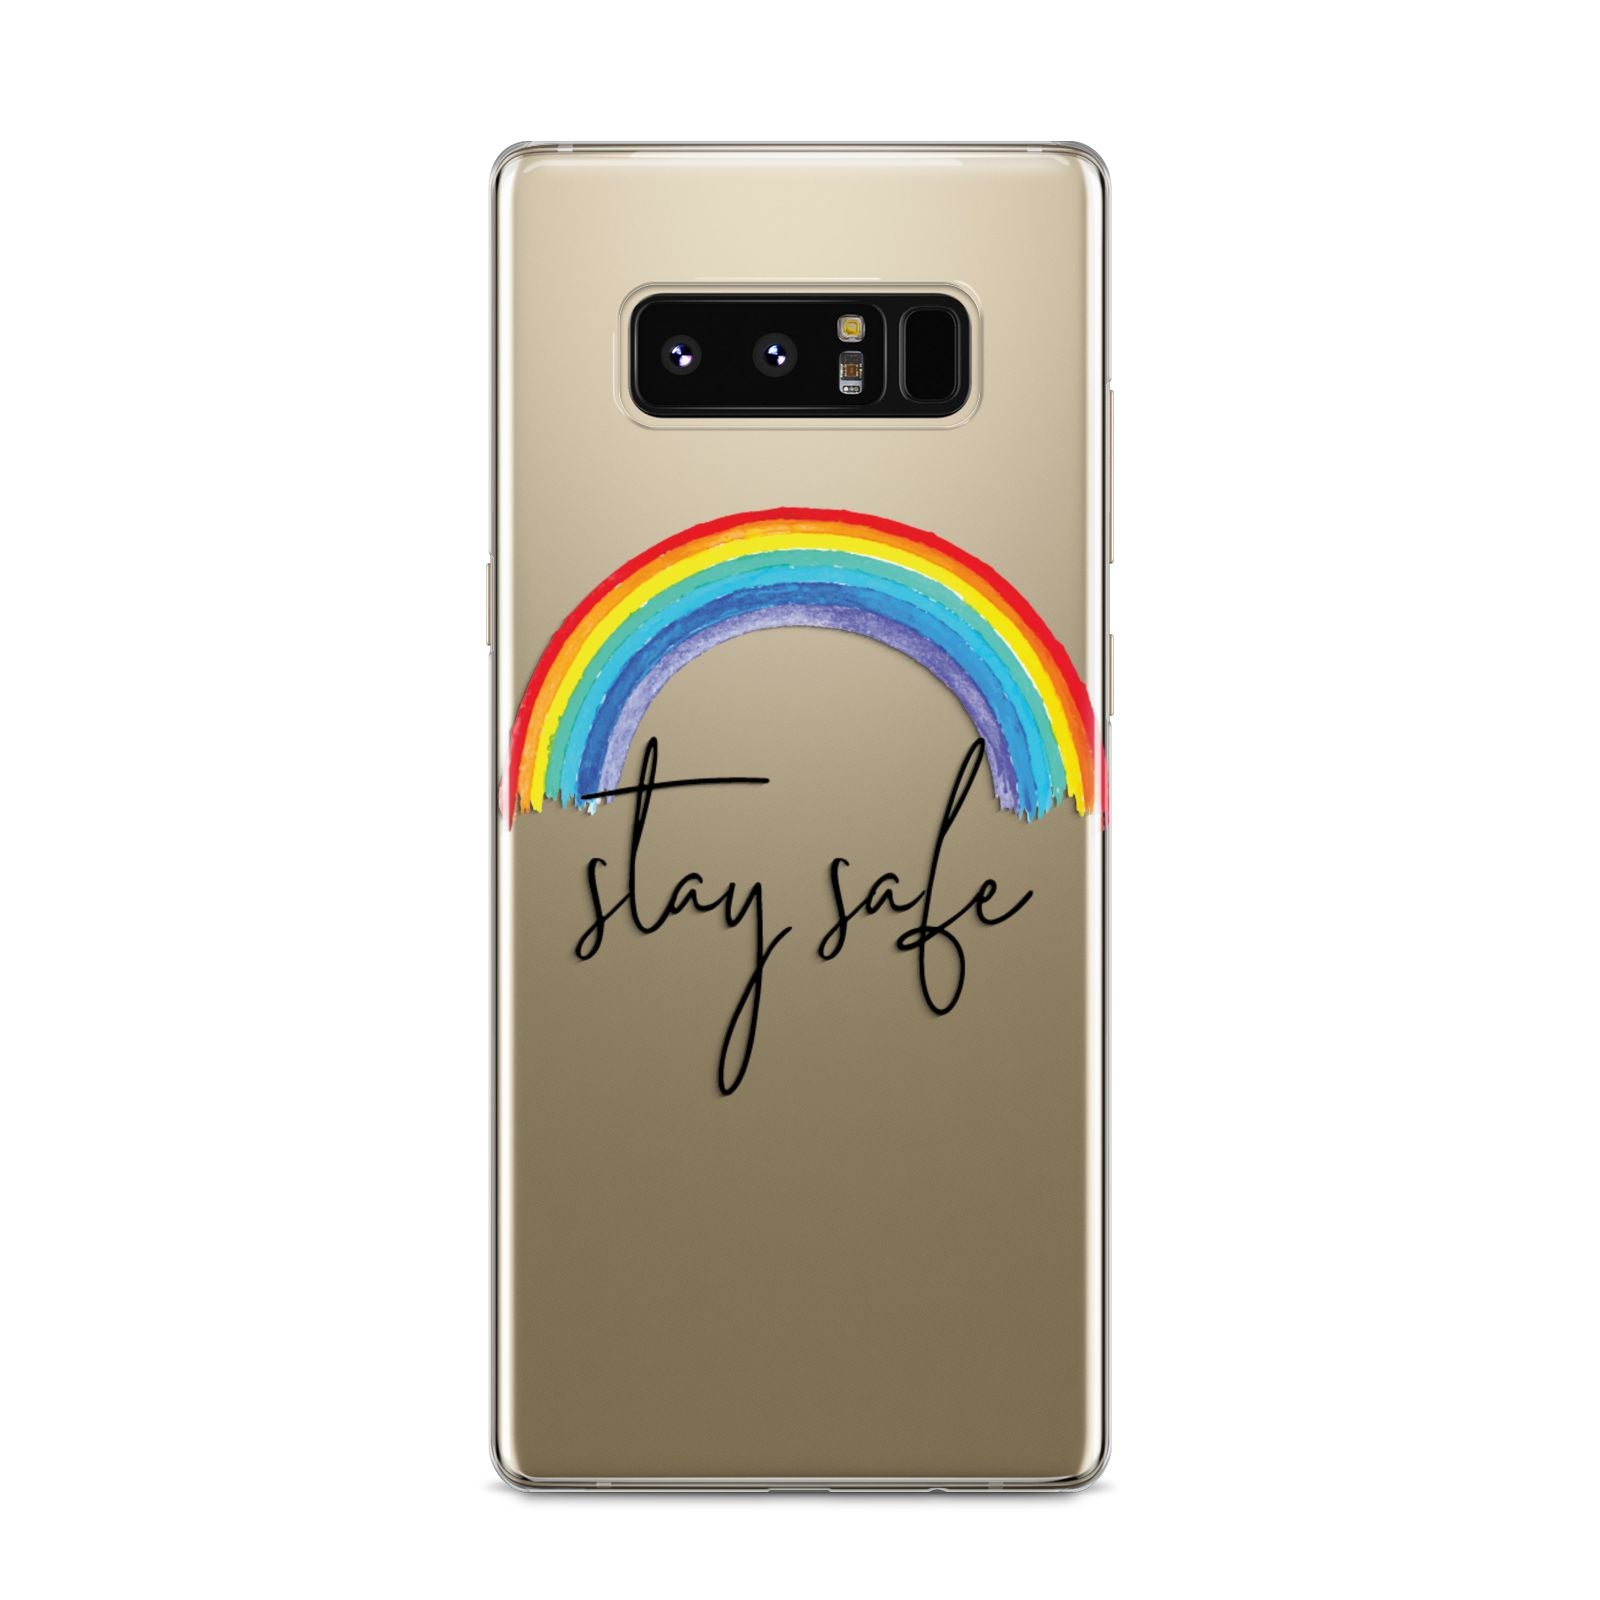 Stay Safe Rainbow Samsung Galaxy S8 Case